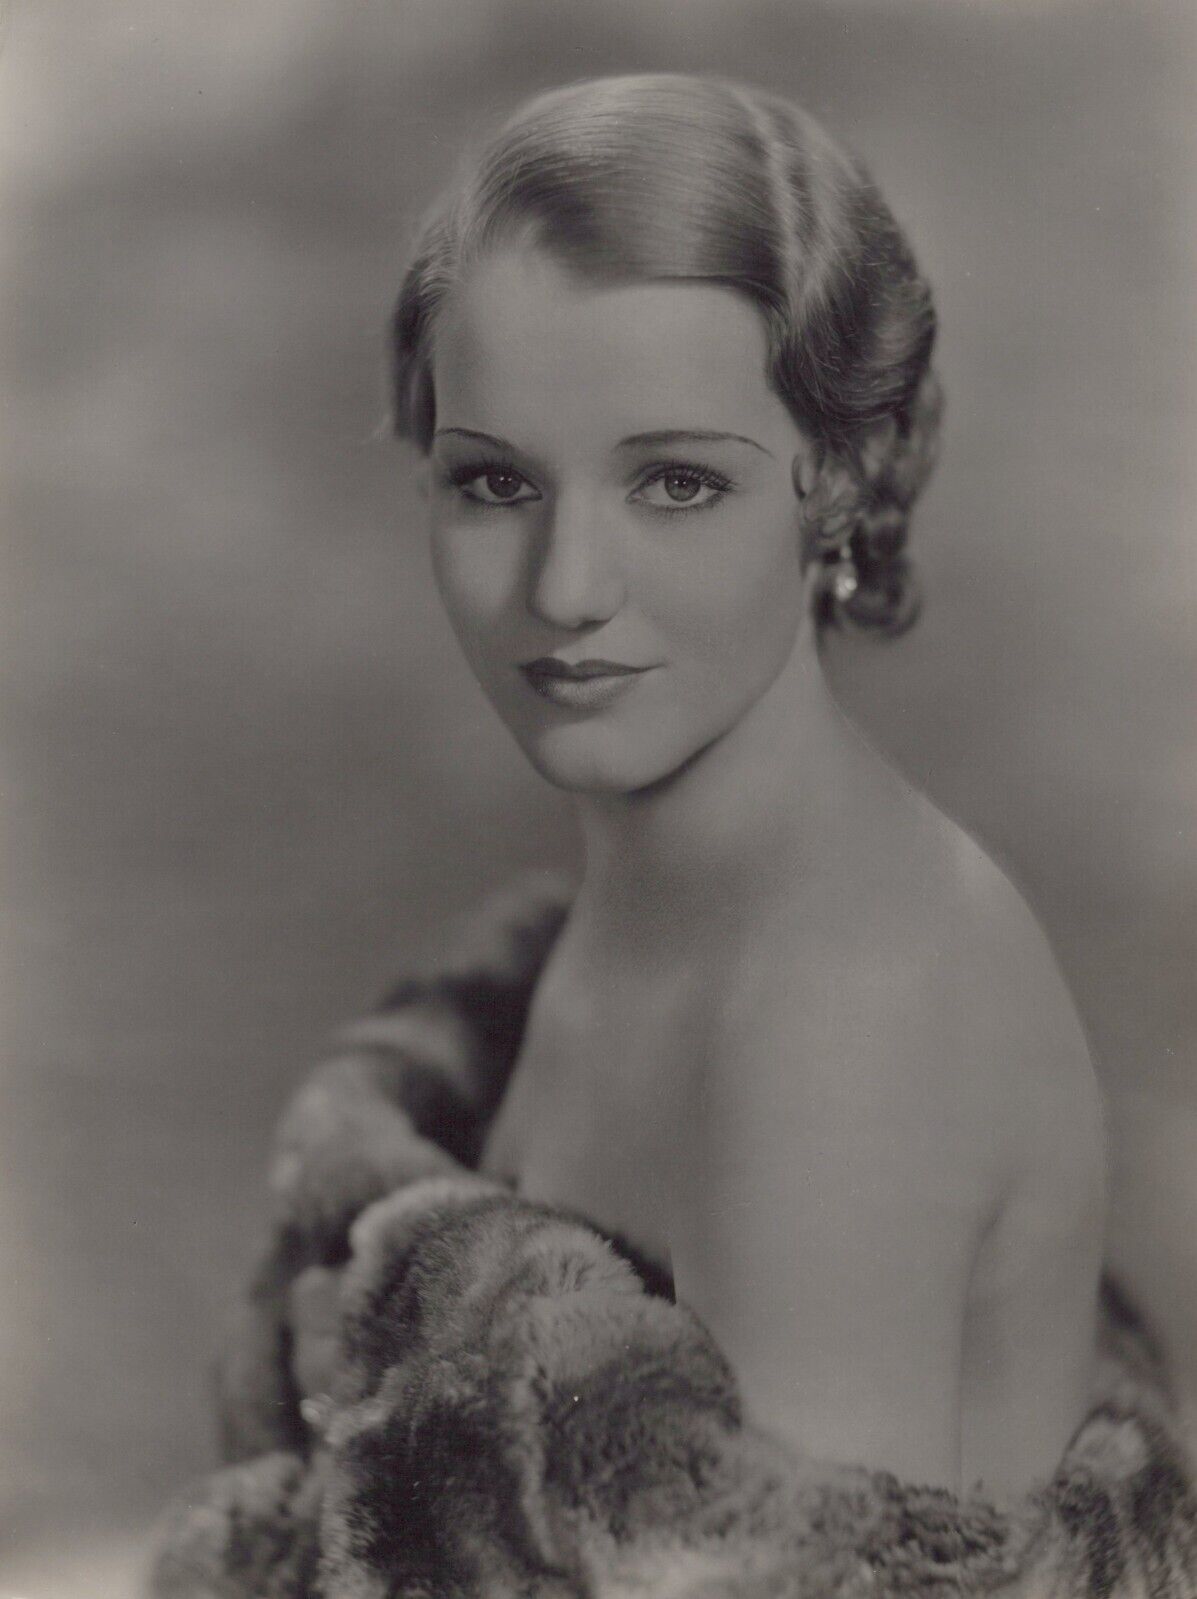 Constance Cummings (1930s) ❤ Hollywood beauty - Original Vintage Photo K 228